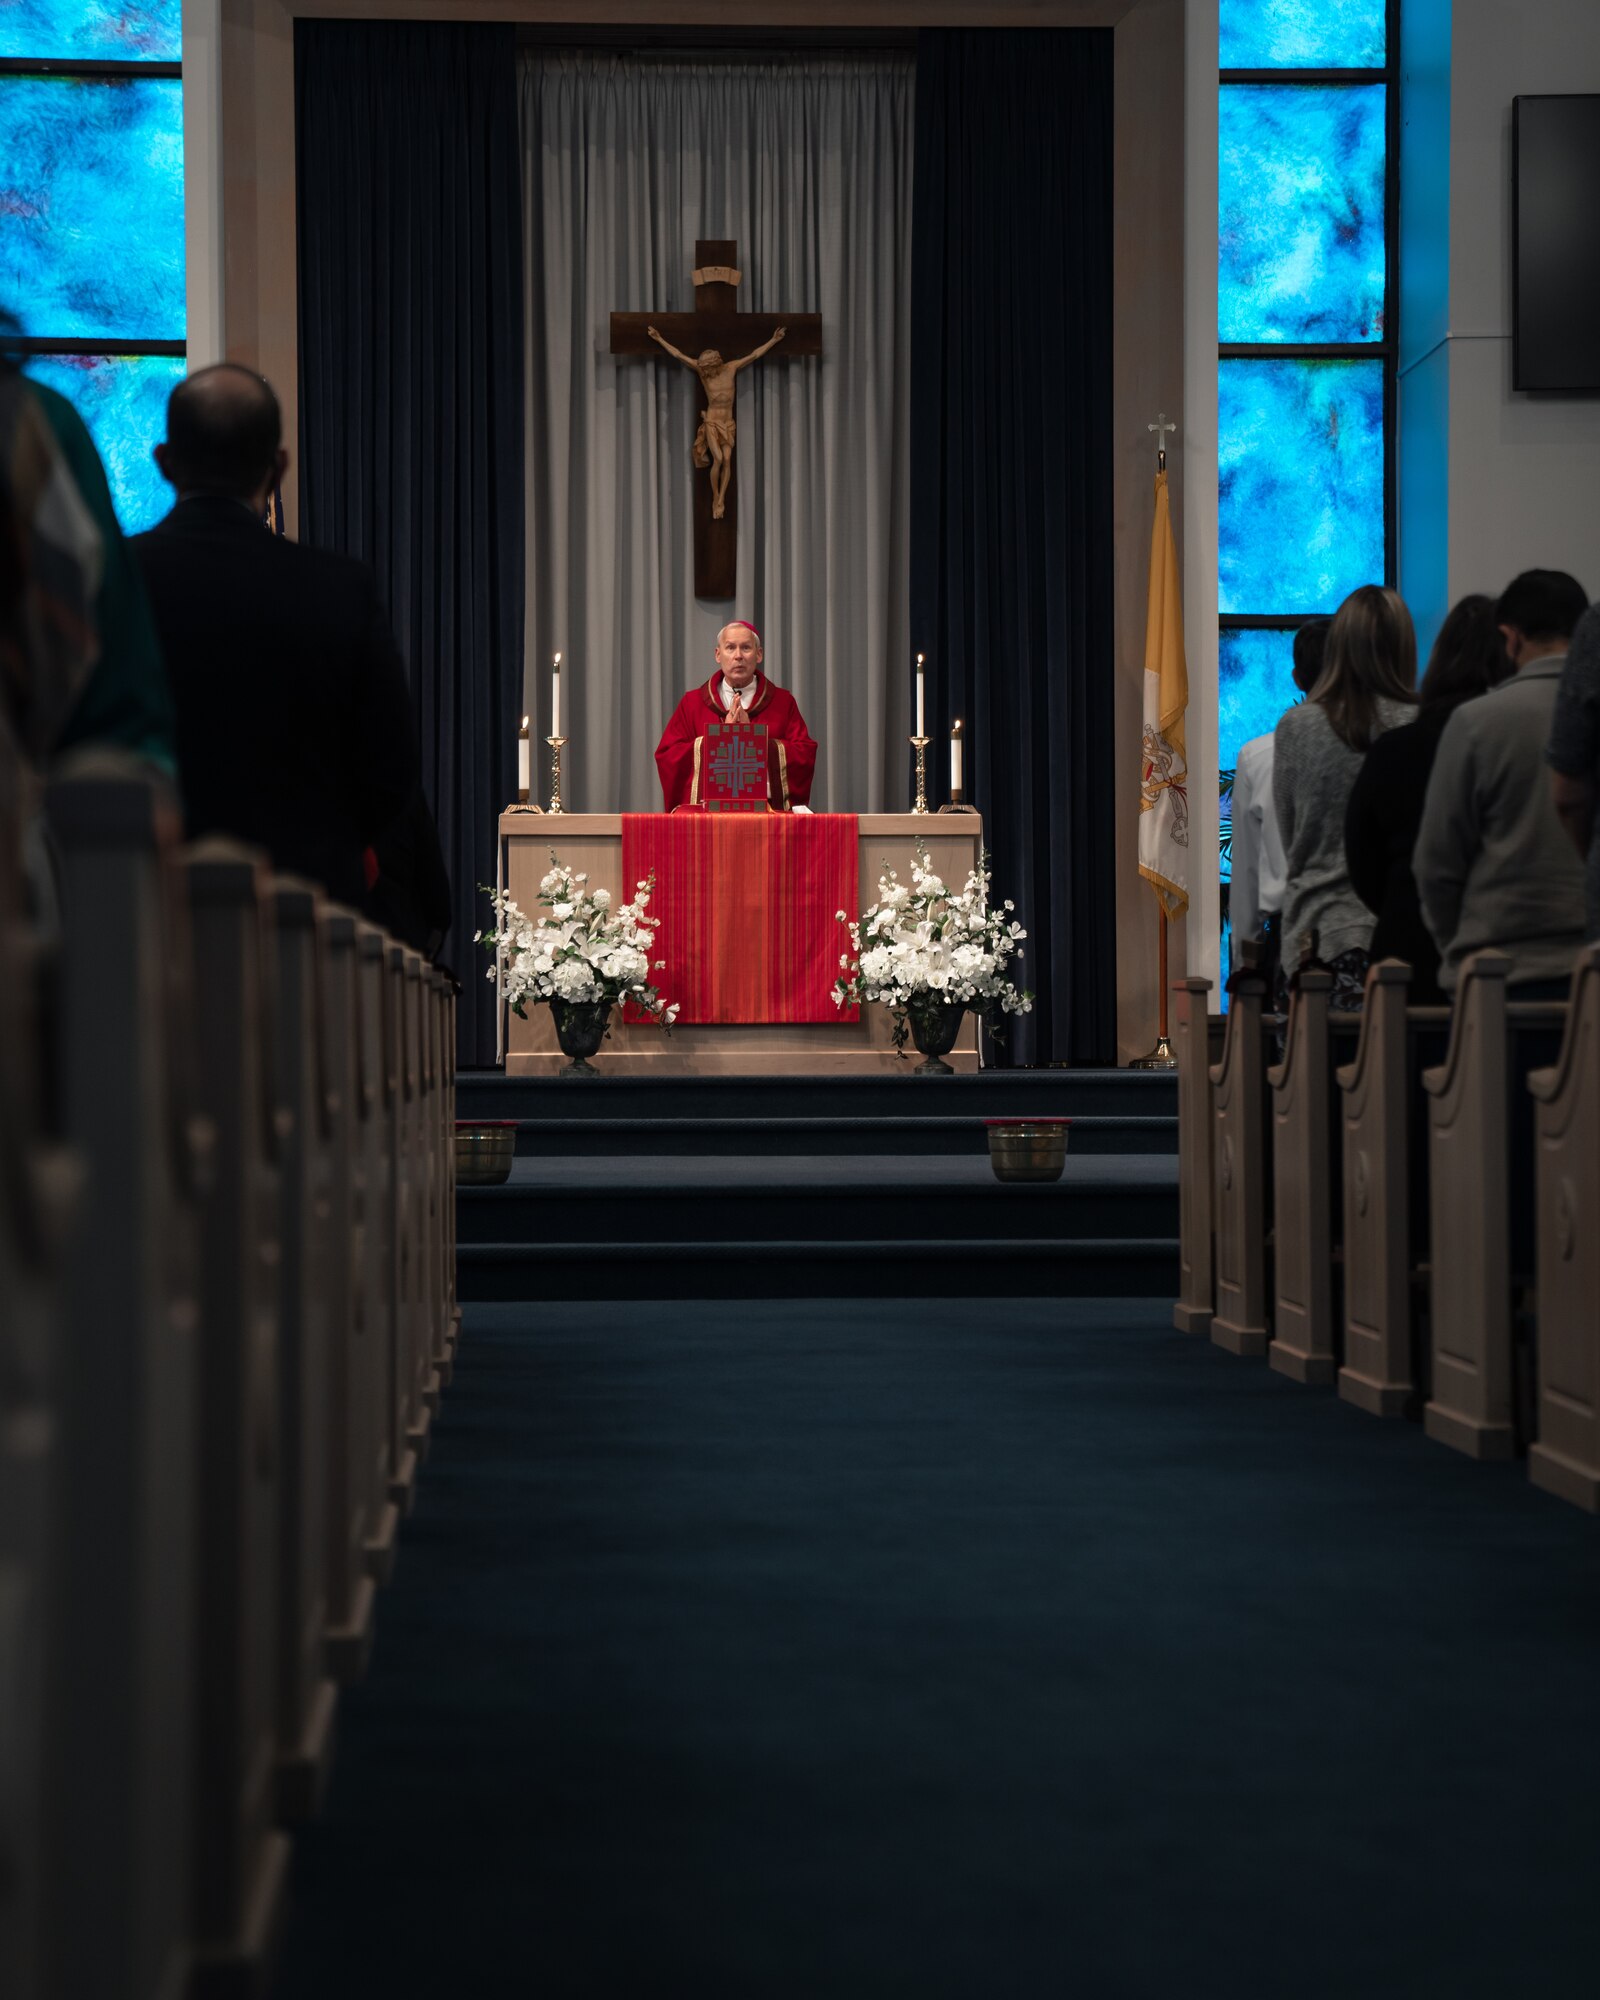 Bishop F. Richard Spencer, Episcopal Vicar for Eastern U.S. Vicariate, leads a sacrament of confirmation service at MacDill Air Force Base, Florida, Jan. 23, 2022.